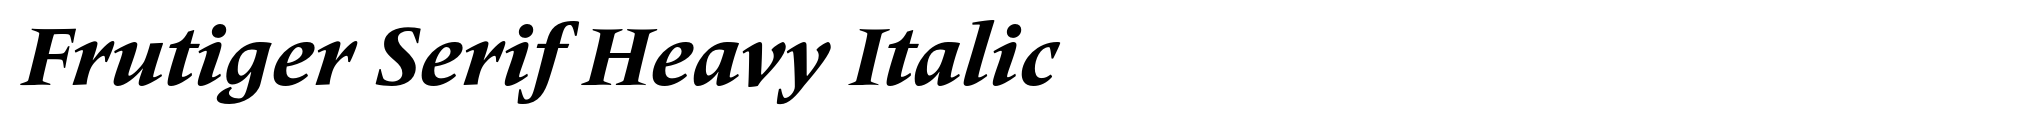 Frutiger Serif Heavy Italic image